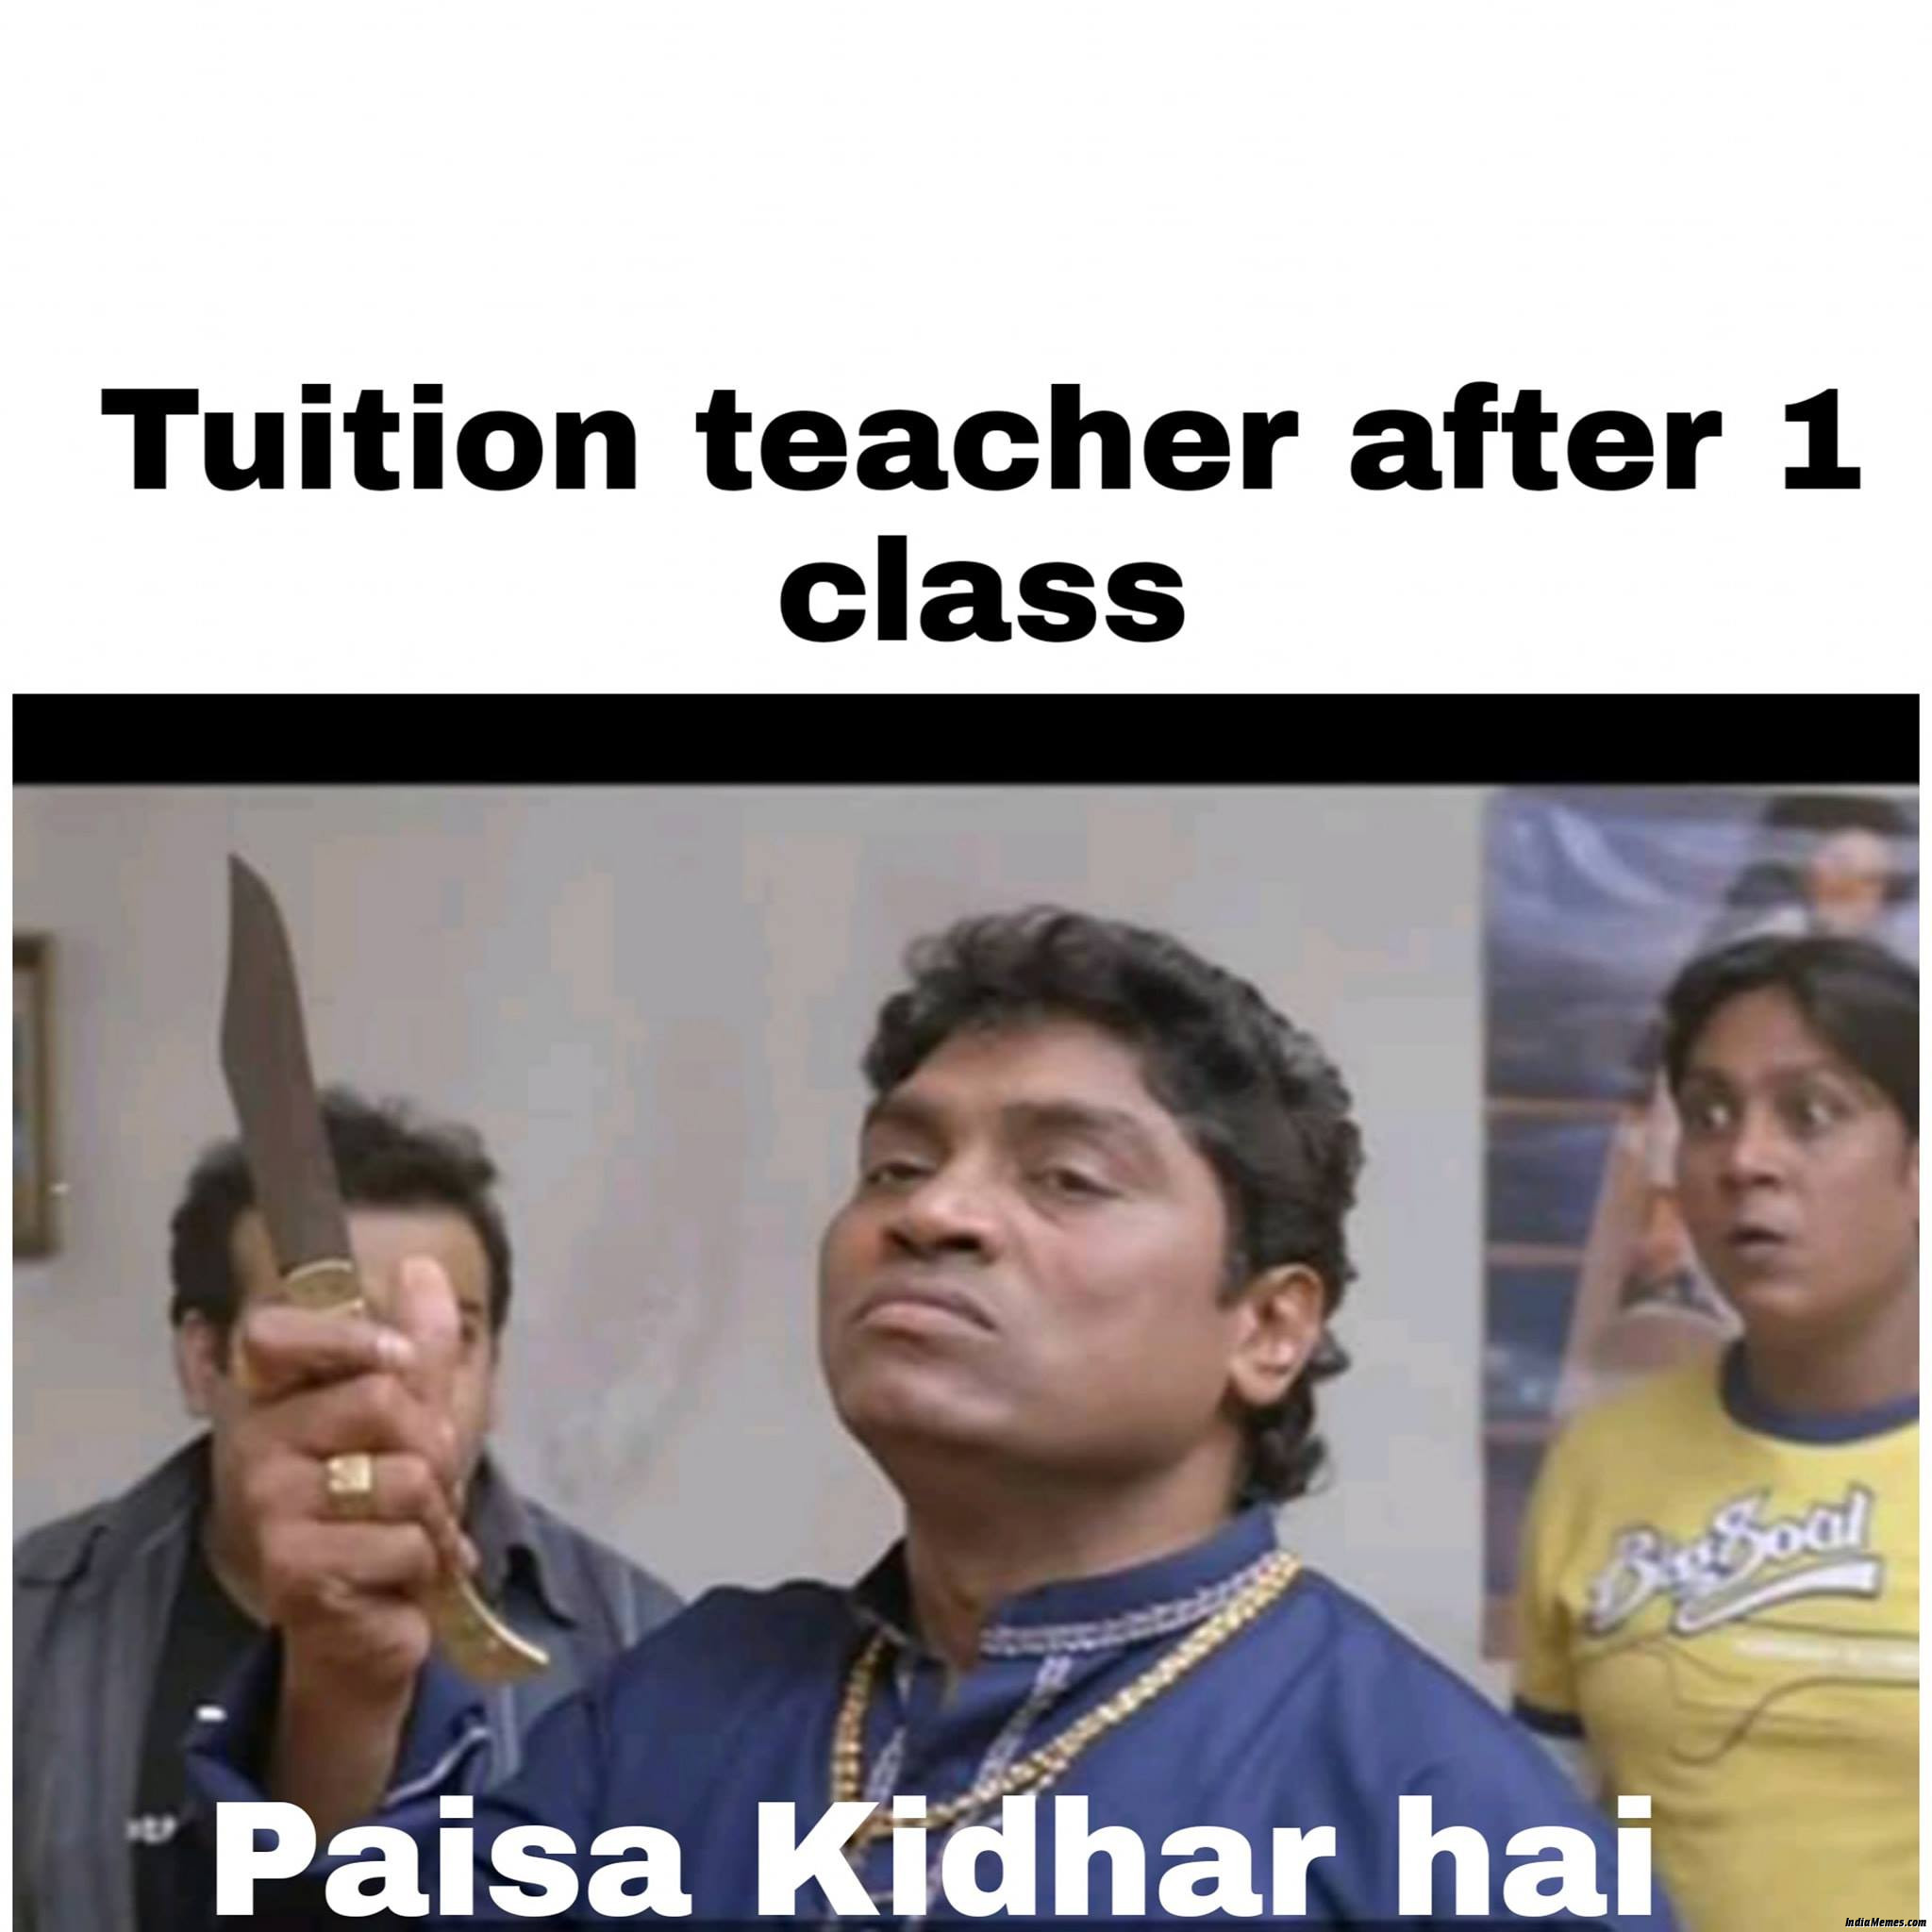 Tution teacher after 1 class Paisa kidhar hai meme.jpg